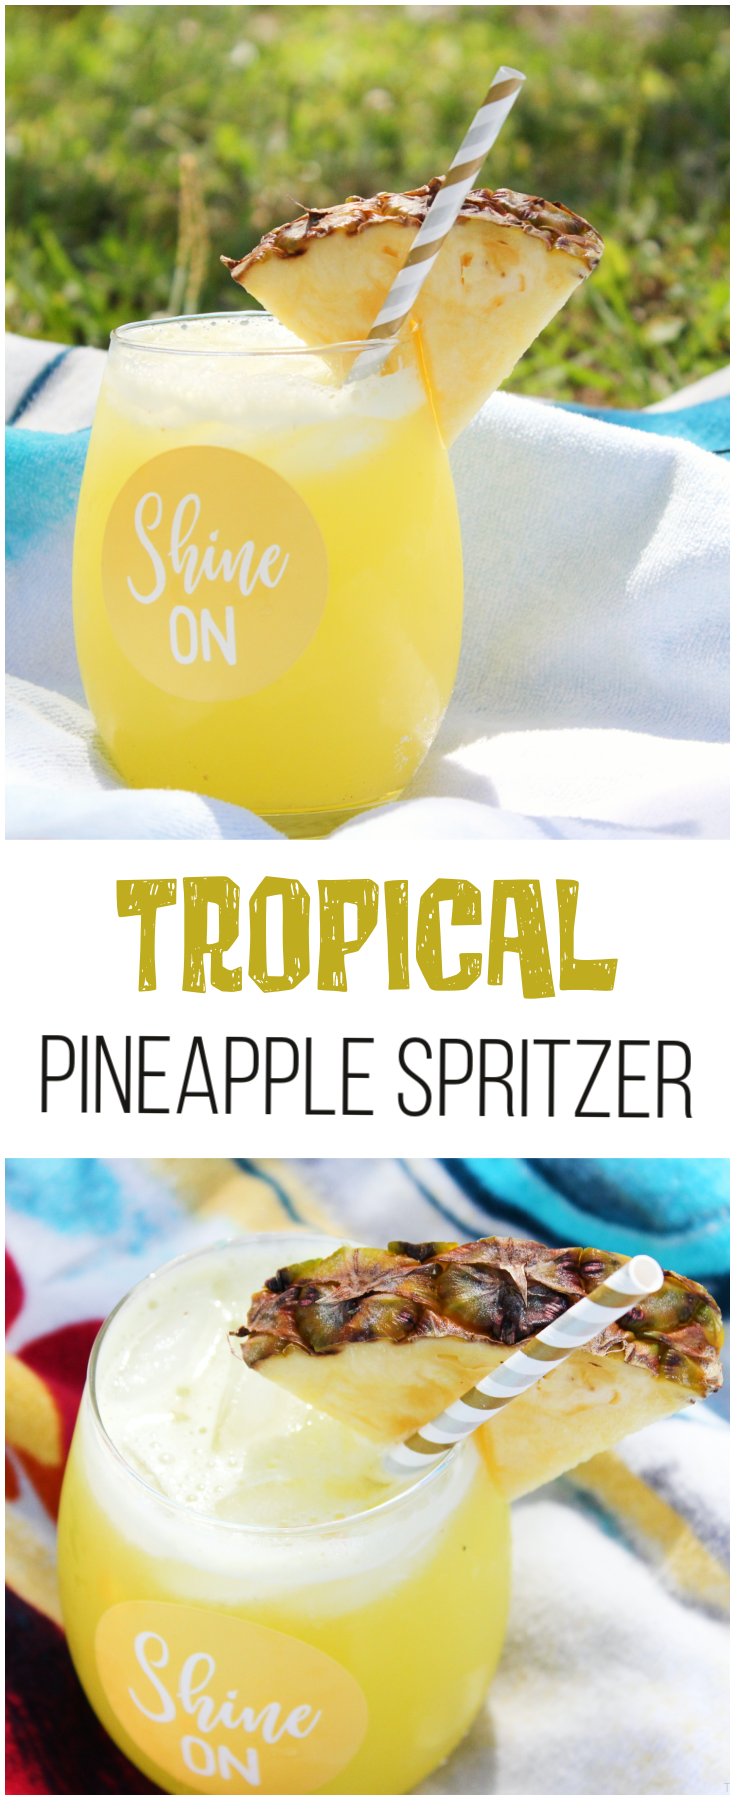 Pineapple Spritzer